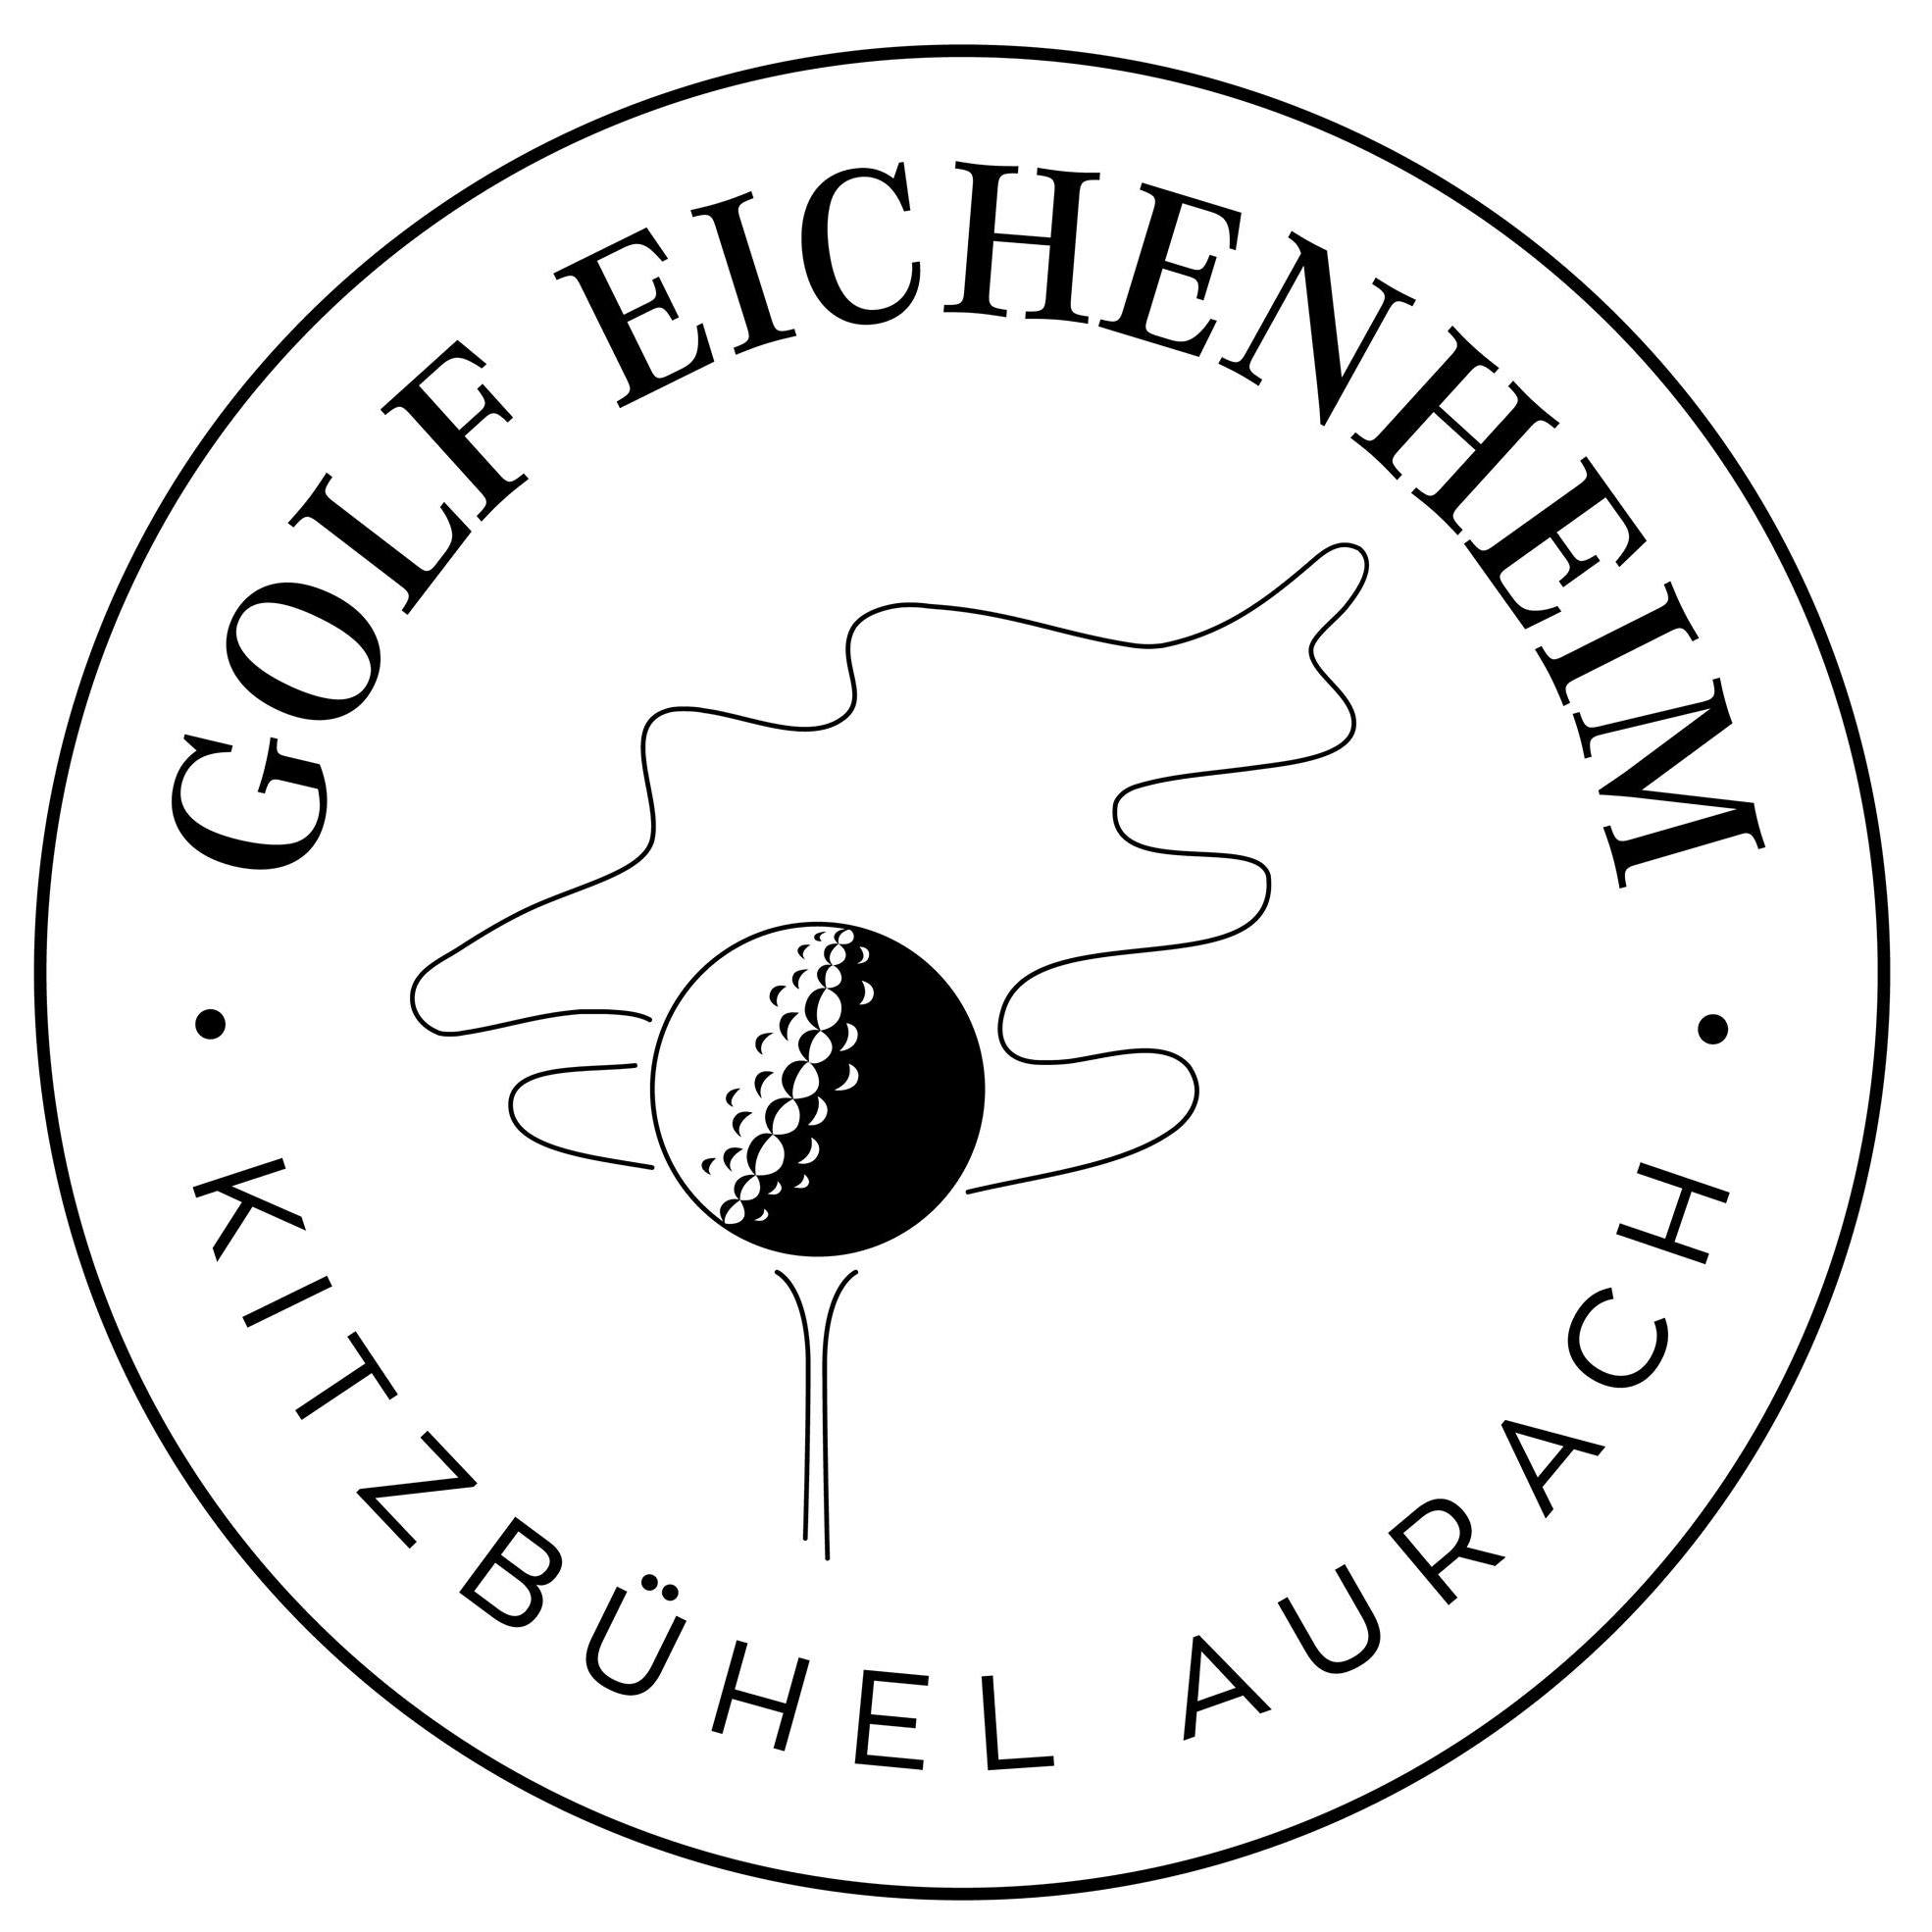 Eichenheim